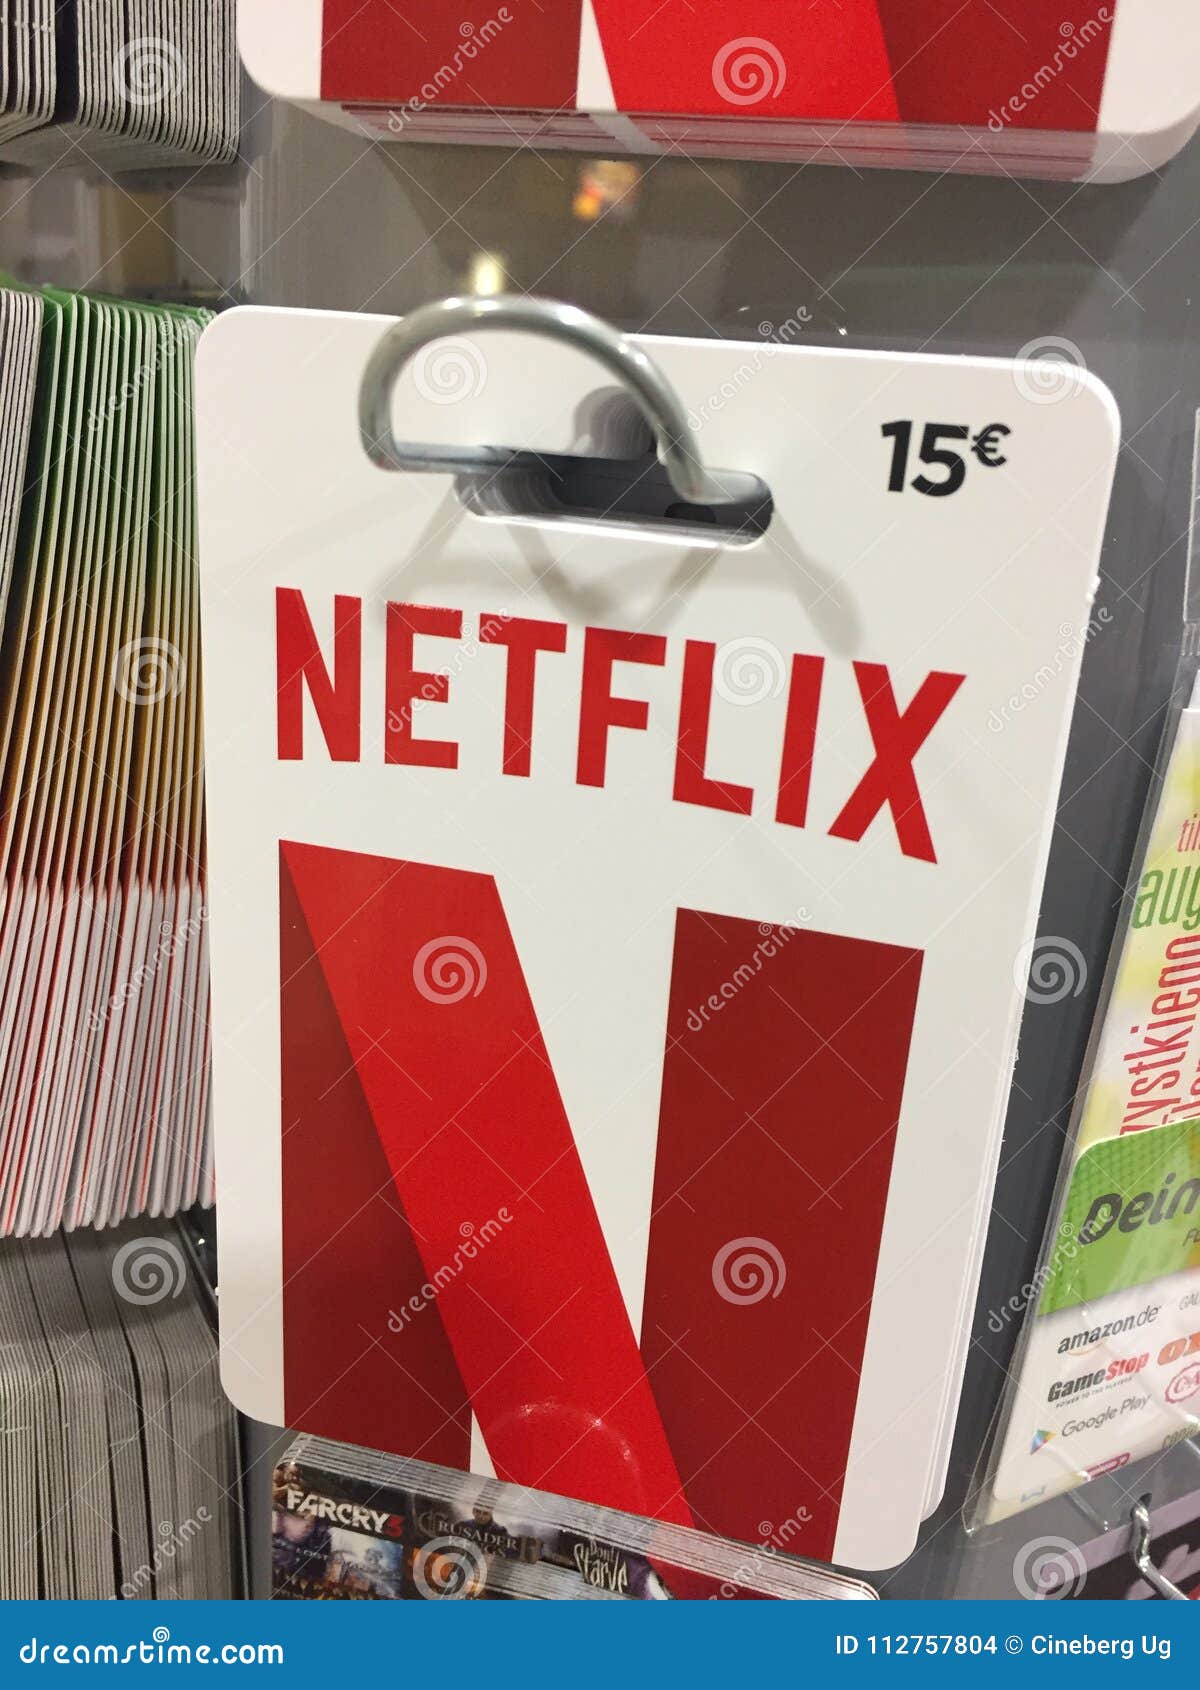 Netflix Gift Card Discount Australia / Dollar General 30